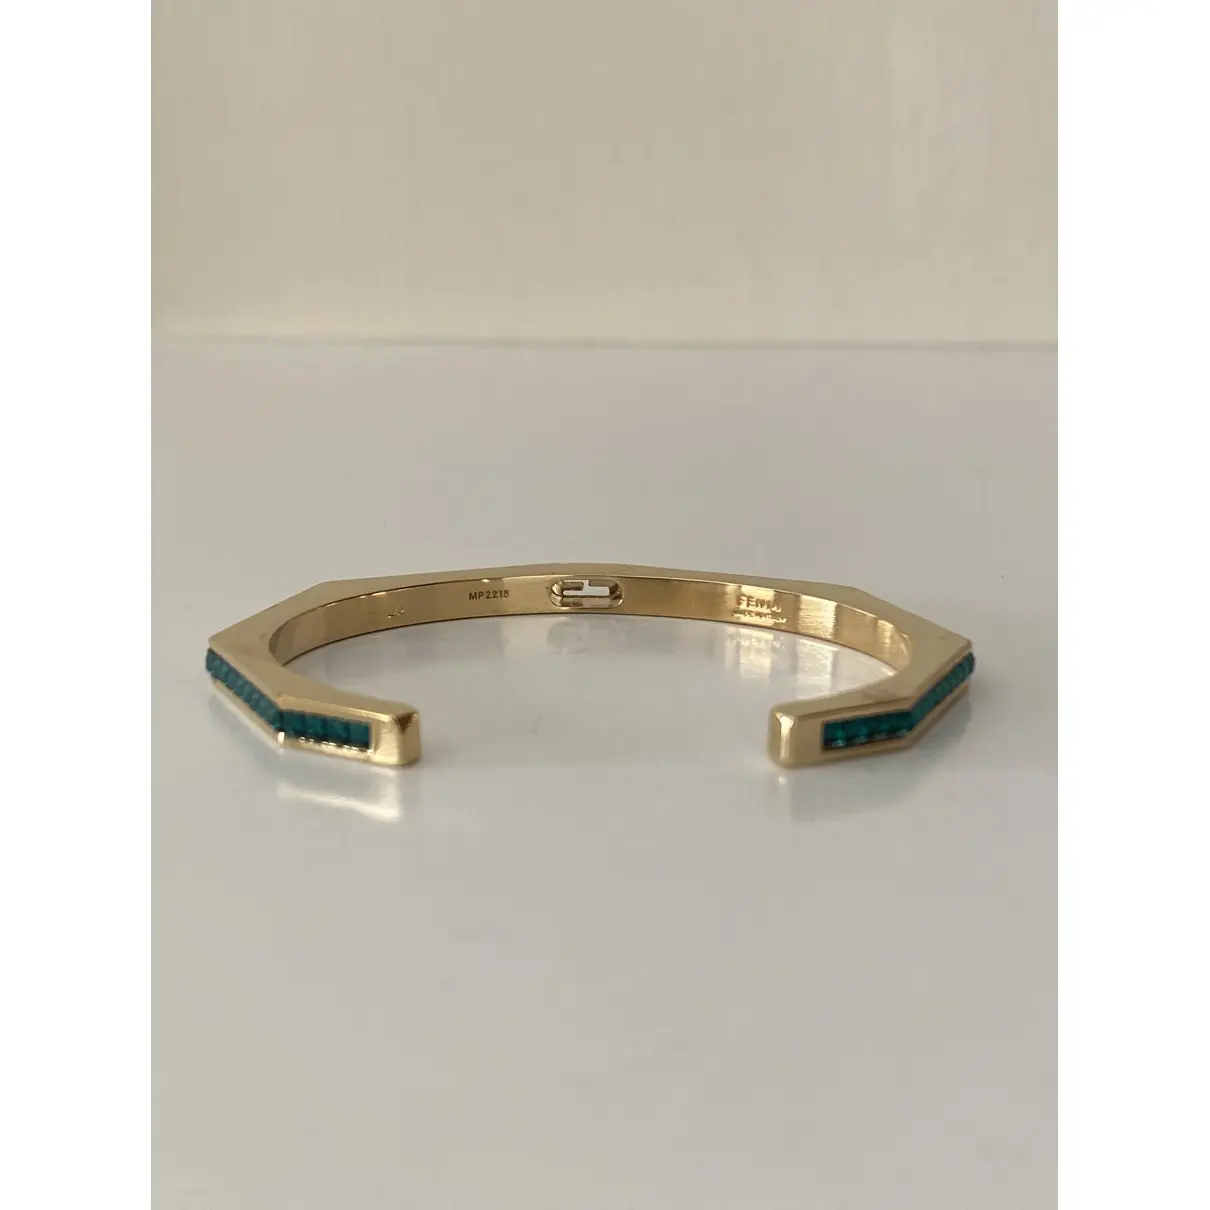 Buy Fendi Gold Metal Bracelet online